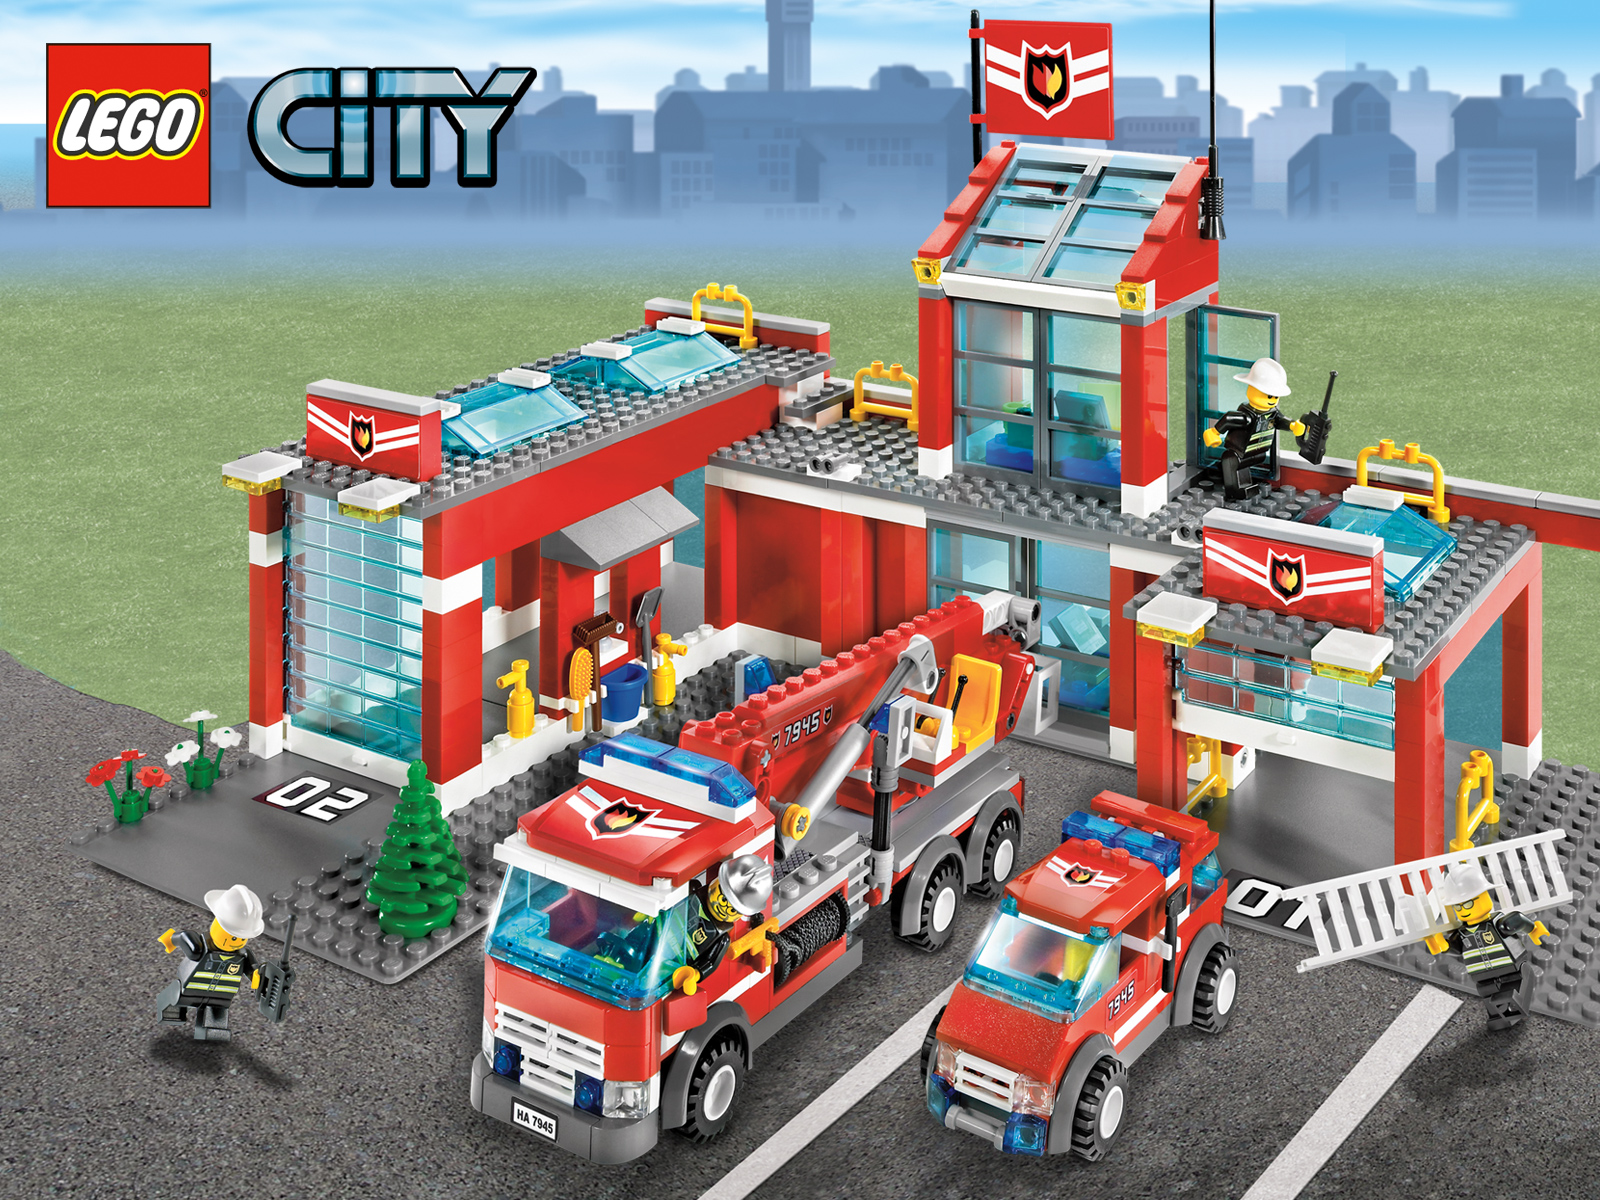 Lego City Desktop Wallpaper For HD Widescreen And Mobile